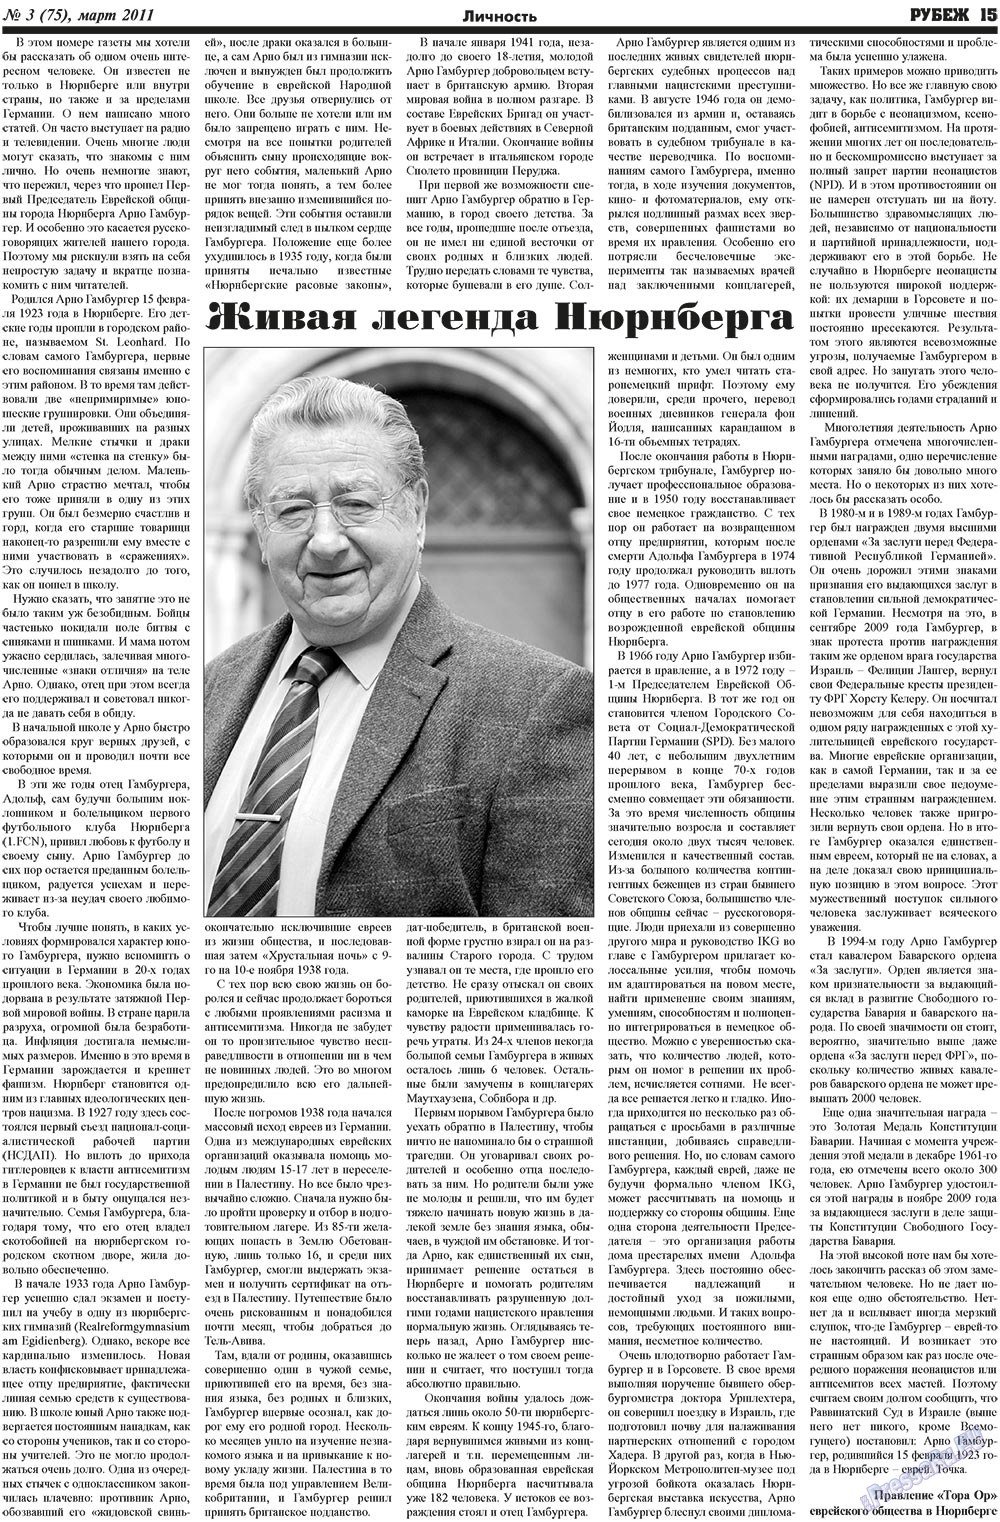 Рубеж, газета. 2011 №3 стр.15